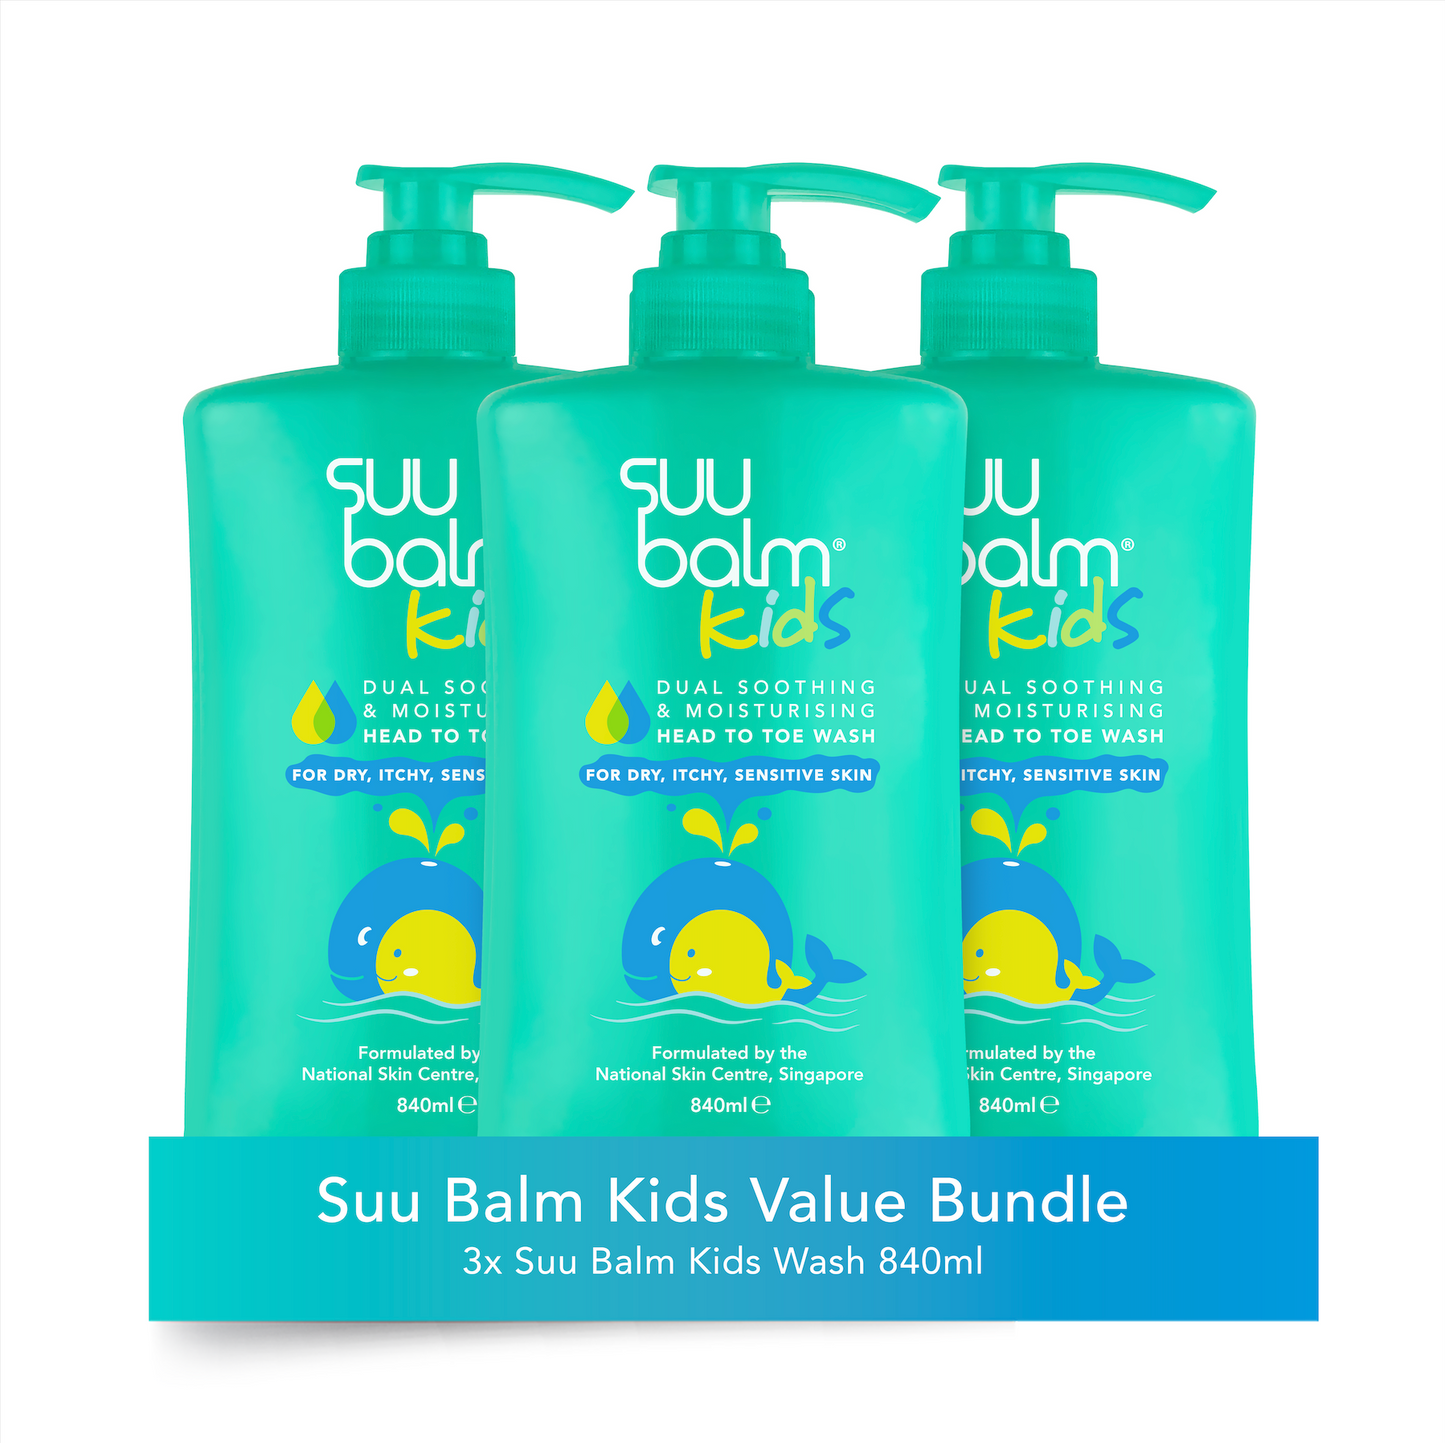 [Save 33%] Suu Balm® Kids Dual Soothing and Moisturising Head-to-Toe Wash Value Bundle (3 x 840ml) - Product Image